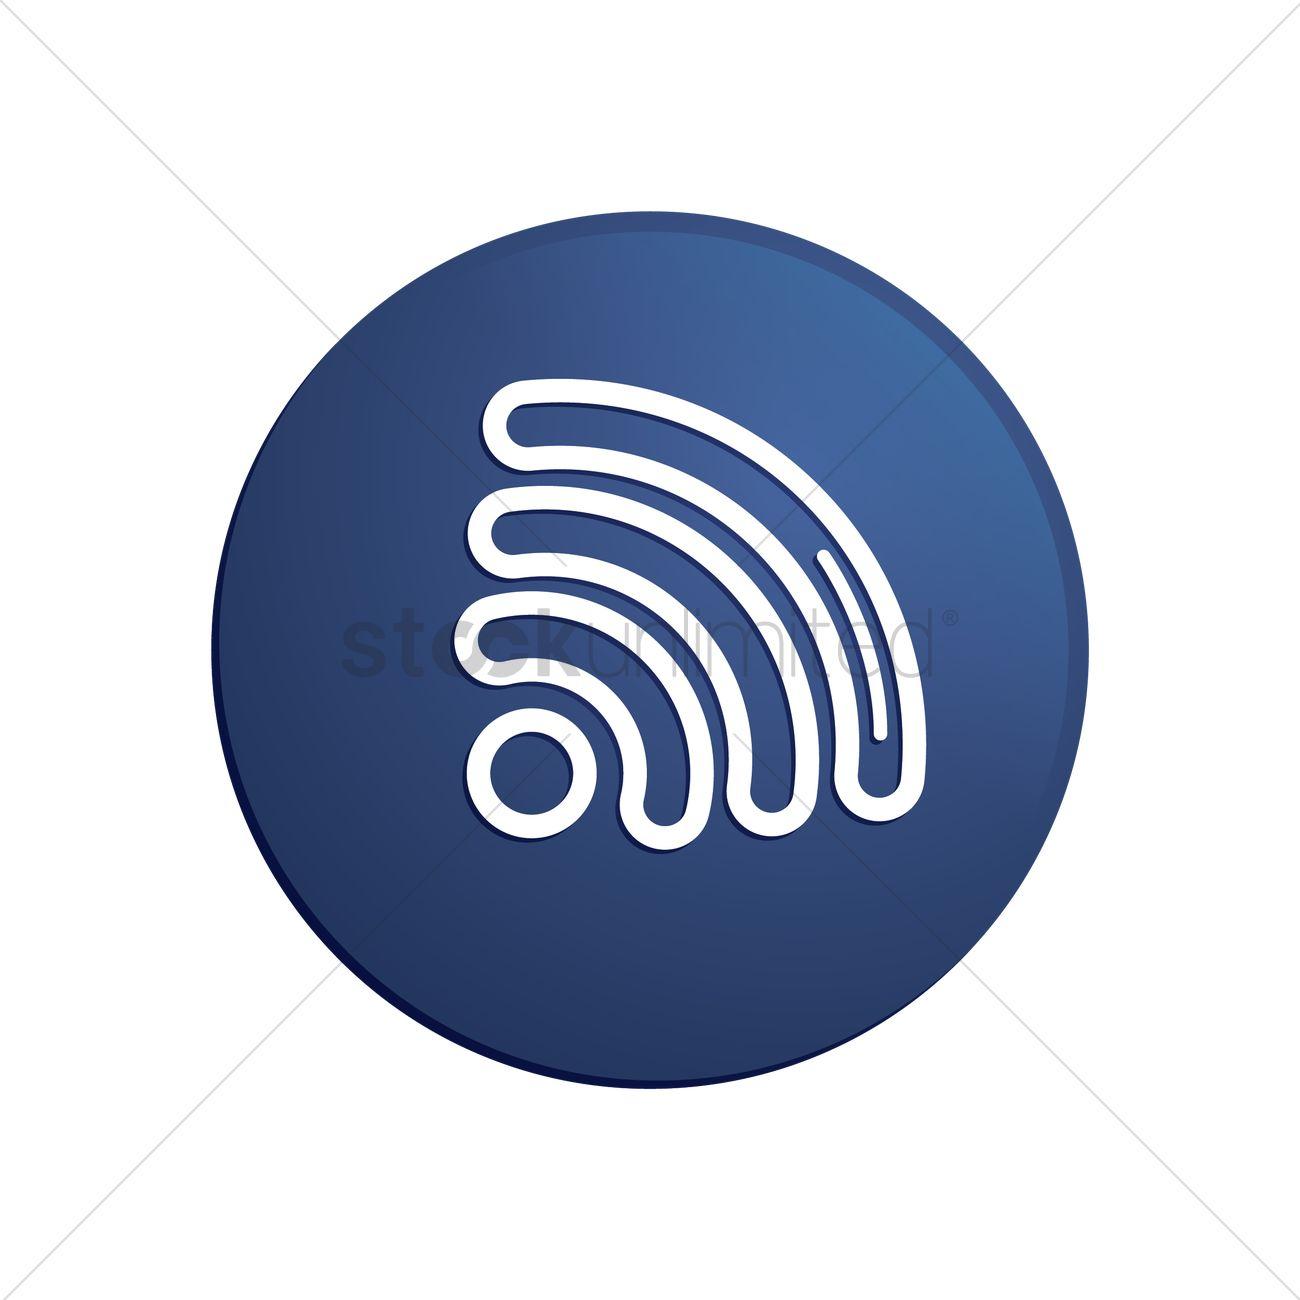 Follow Logo - Follow icon Vector Image - 1590344 | StockUnlimited